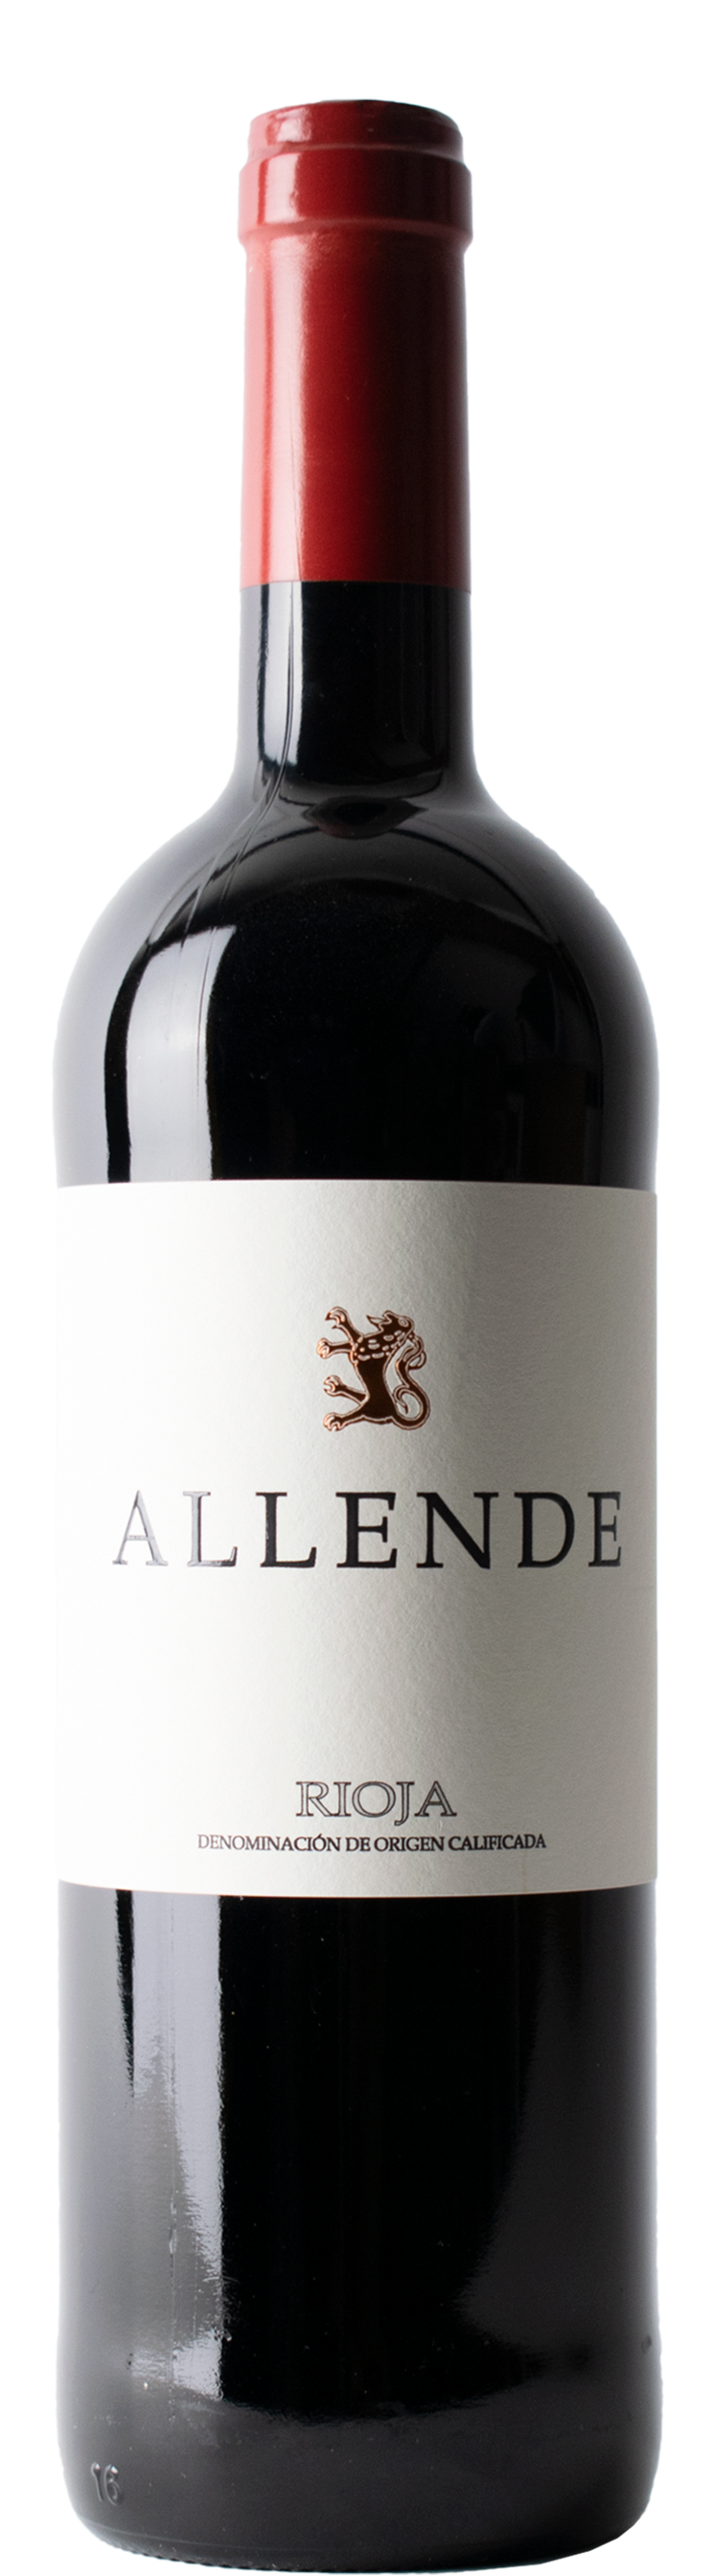 Rioja 2015 Allende